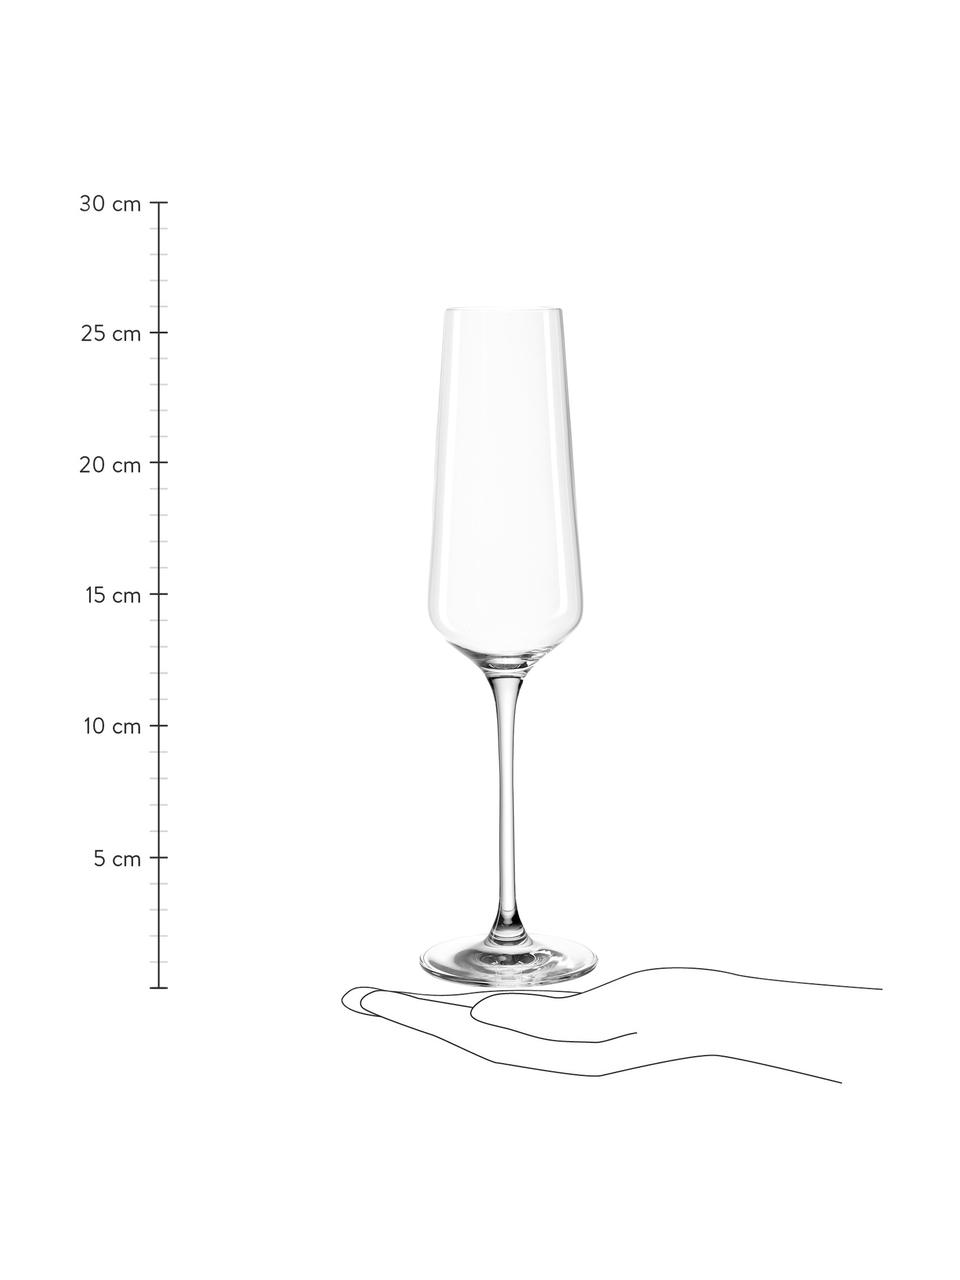 Sektgläser Puccini, 6 Stück, Teqton®-Glas, Transparent, Ø 7 x H 26 cm, 280 ml